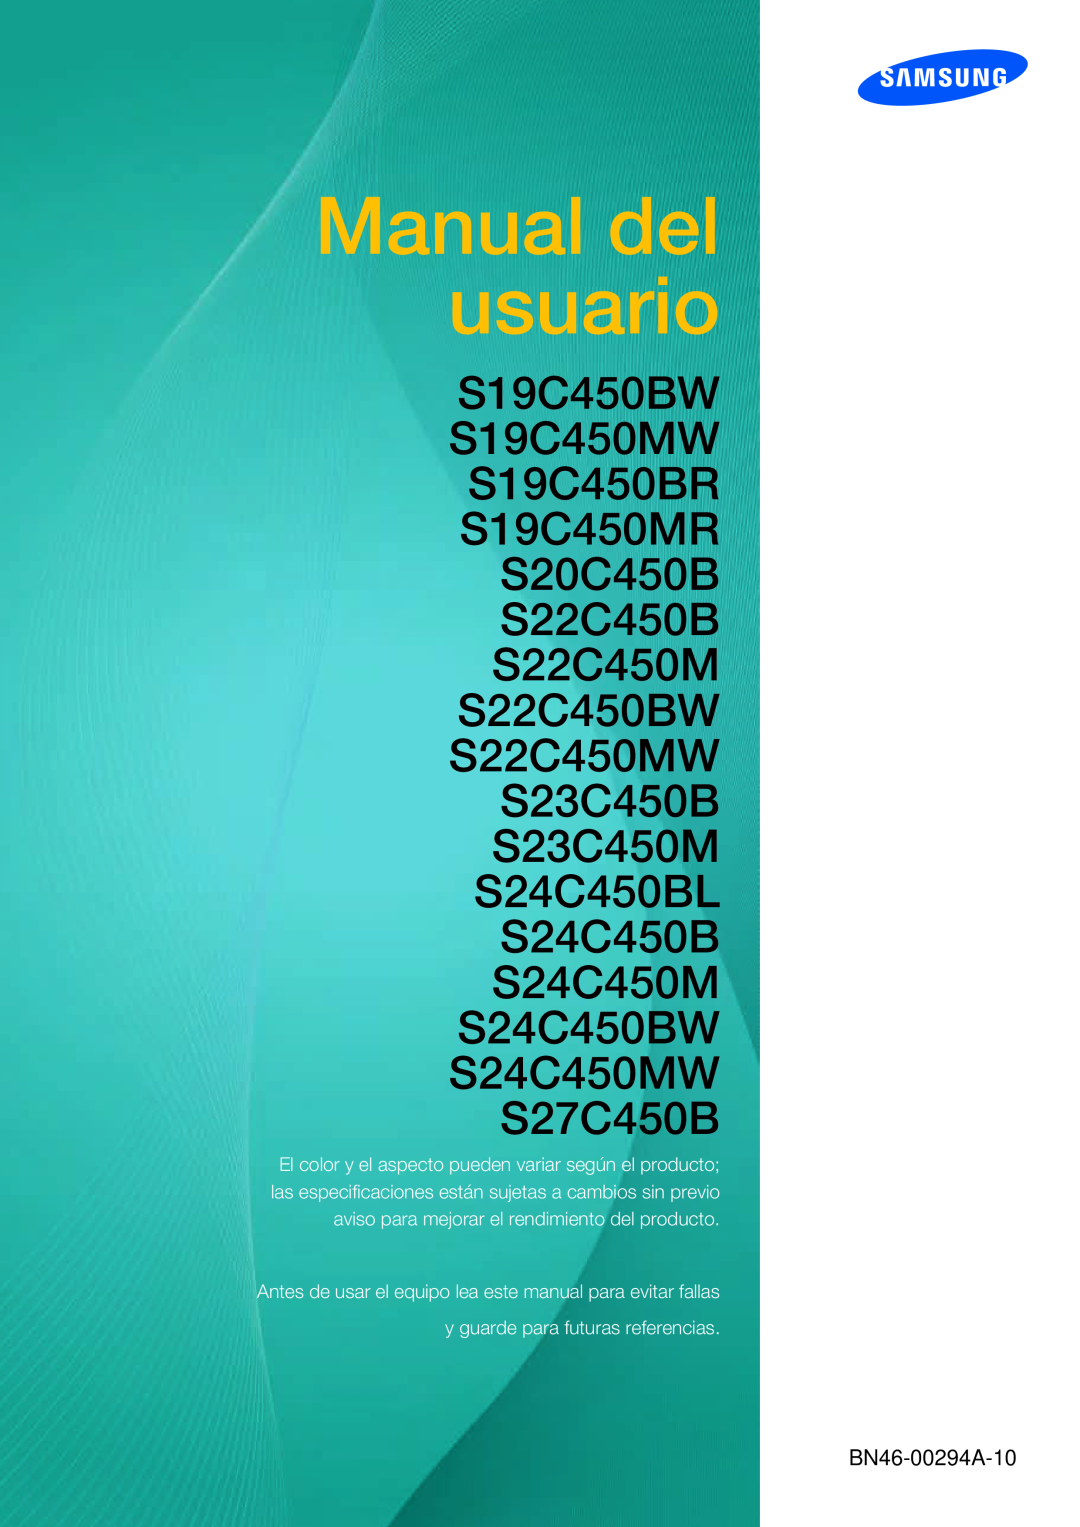 Samsung LS19C45KMWV/EN manual 用户手册, S19C450BW S19C450MW S19C450BR S19C450MR S20C450B S22C450B S22C450M, BN46-00294A-10 